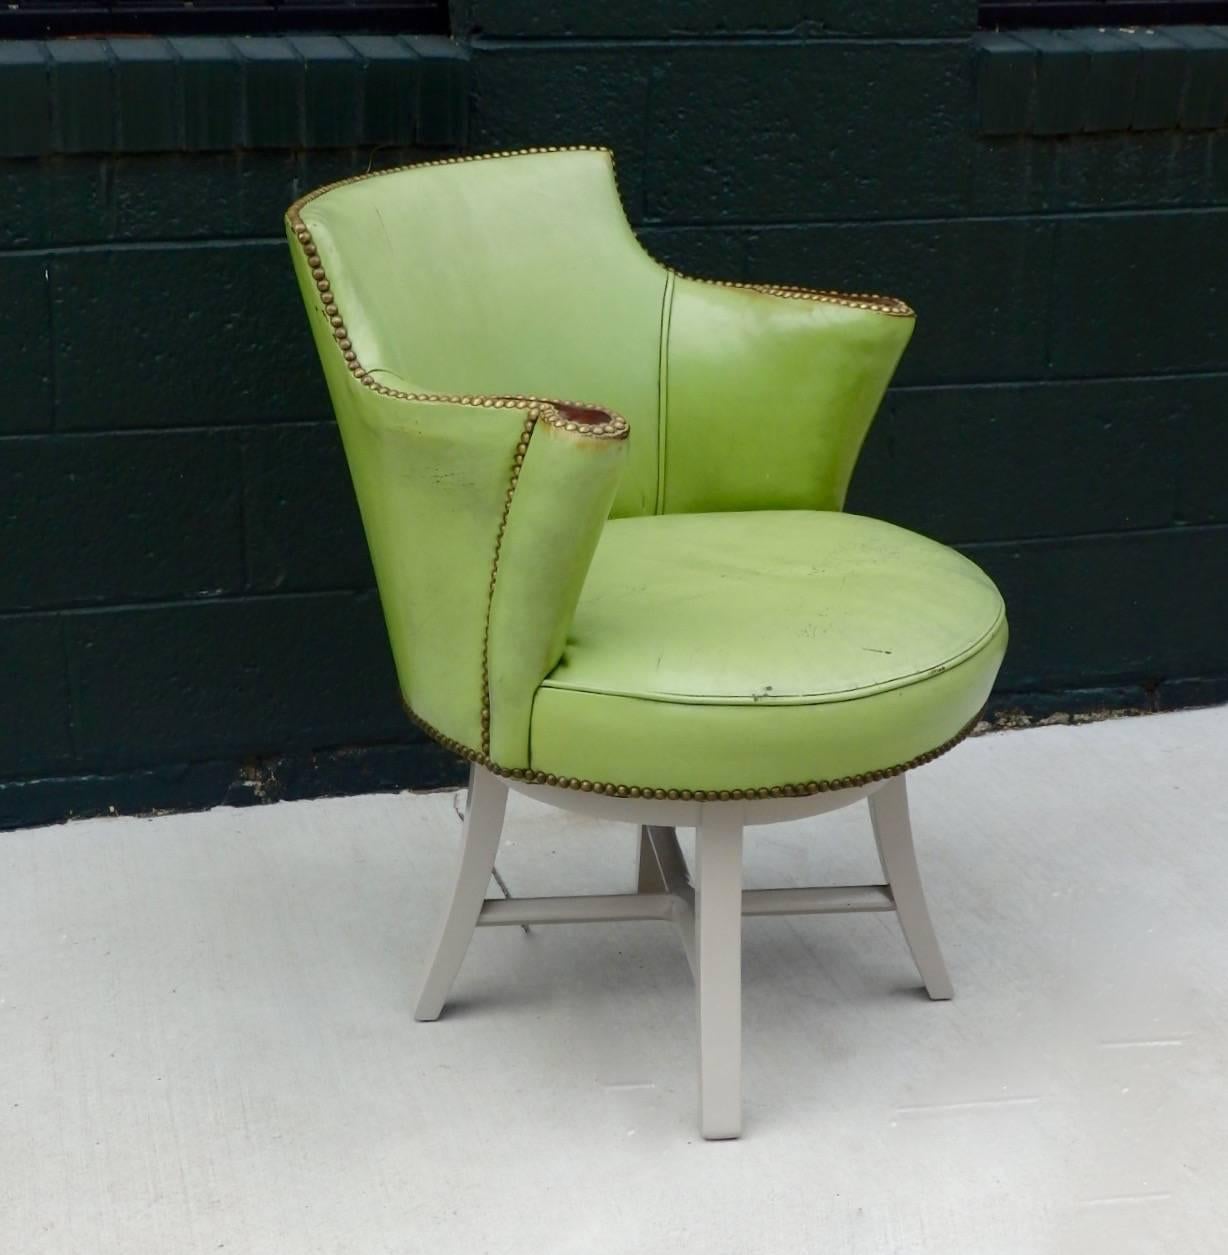 Worn Apple Green Art Deco Swivel Chair 1